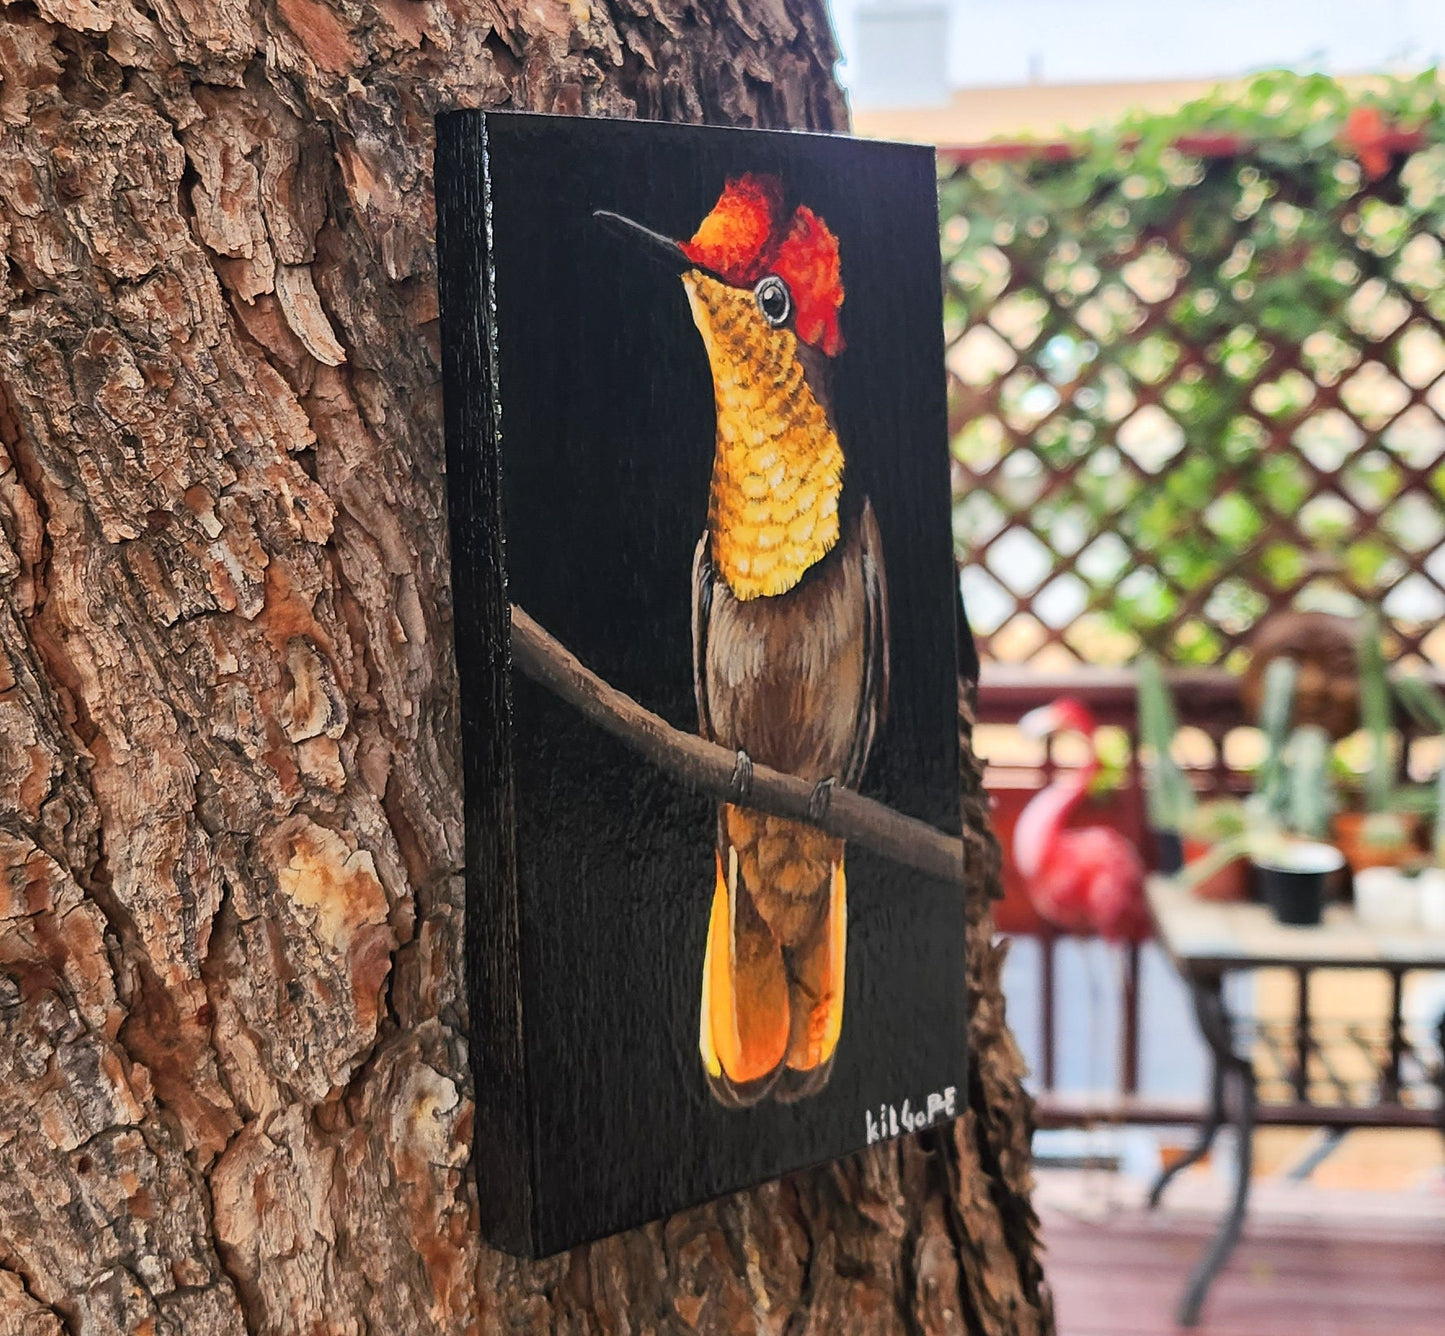 Ruby Topaz Hummingbird - Original Acrylic Painting on Reclaimed Wood - By Kilgore, Original 3.5" x 6" Acrylic Painting | Hummingbird Artwork